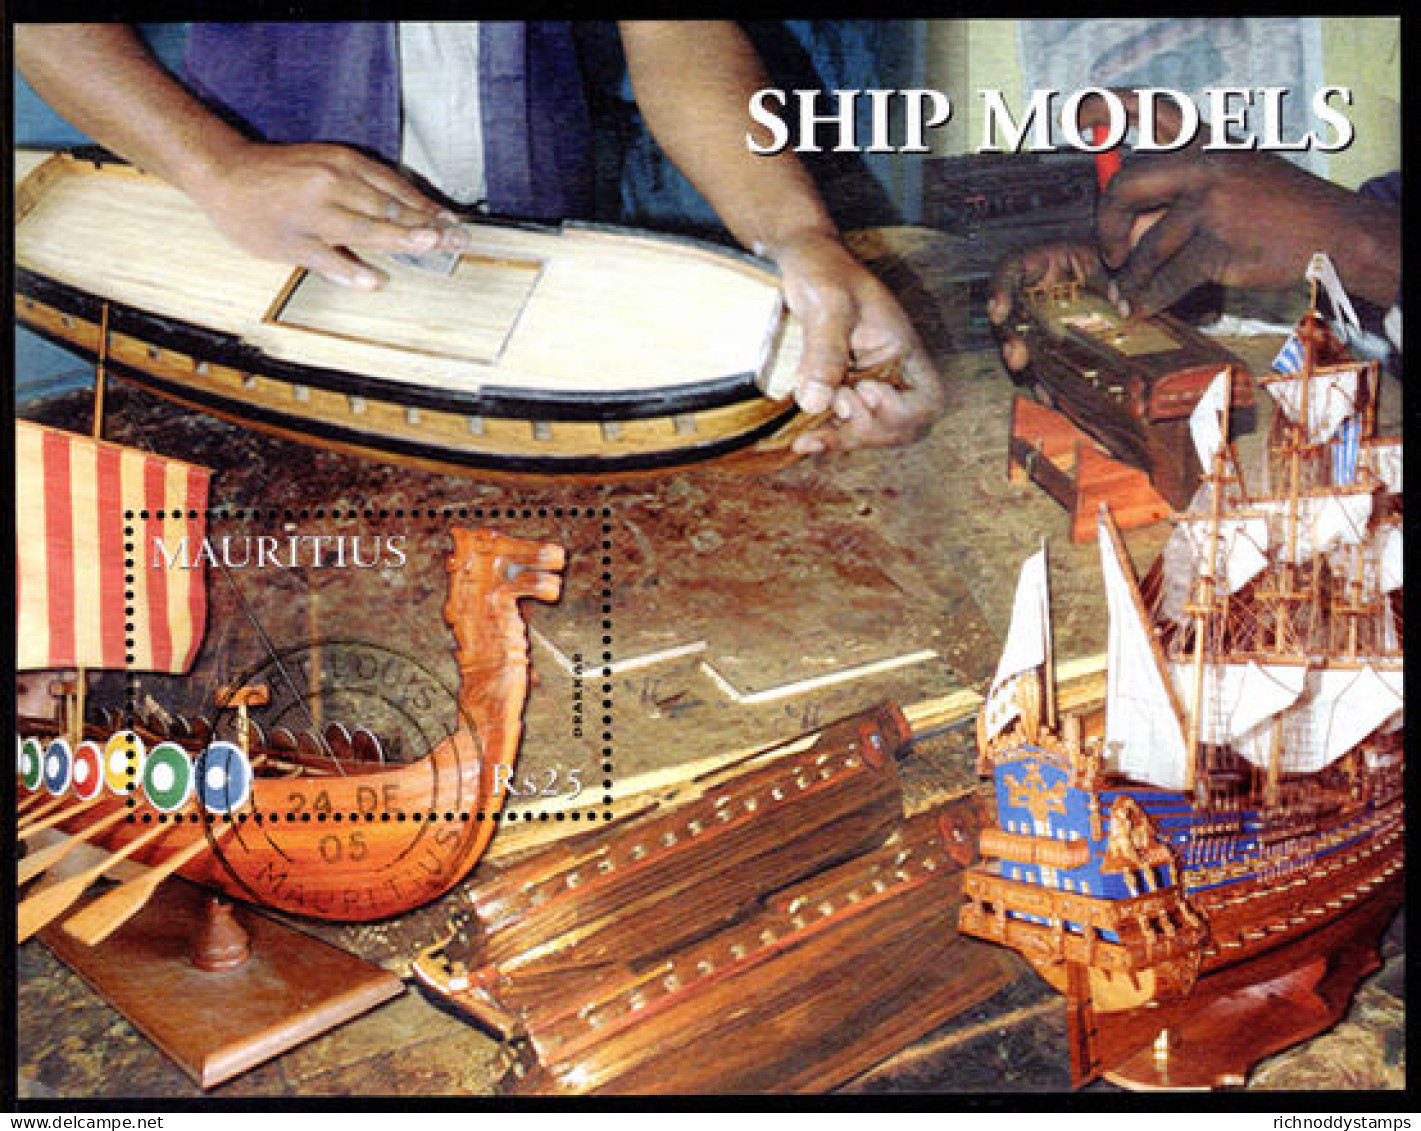 Mauritius 2005 Model Ships Souvenir Sheet Fine Used. - Mauritius (1968-...)